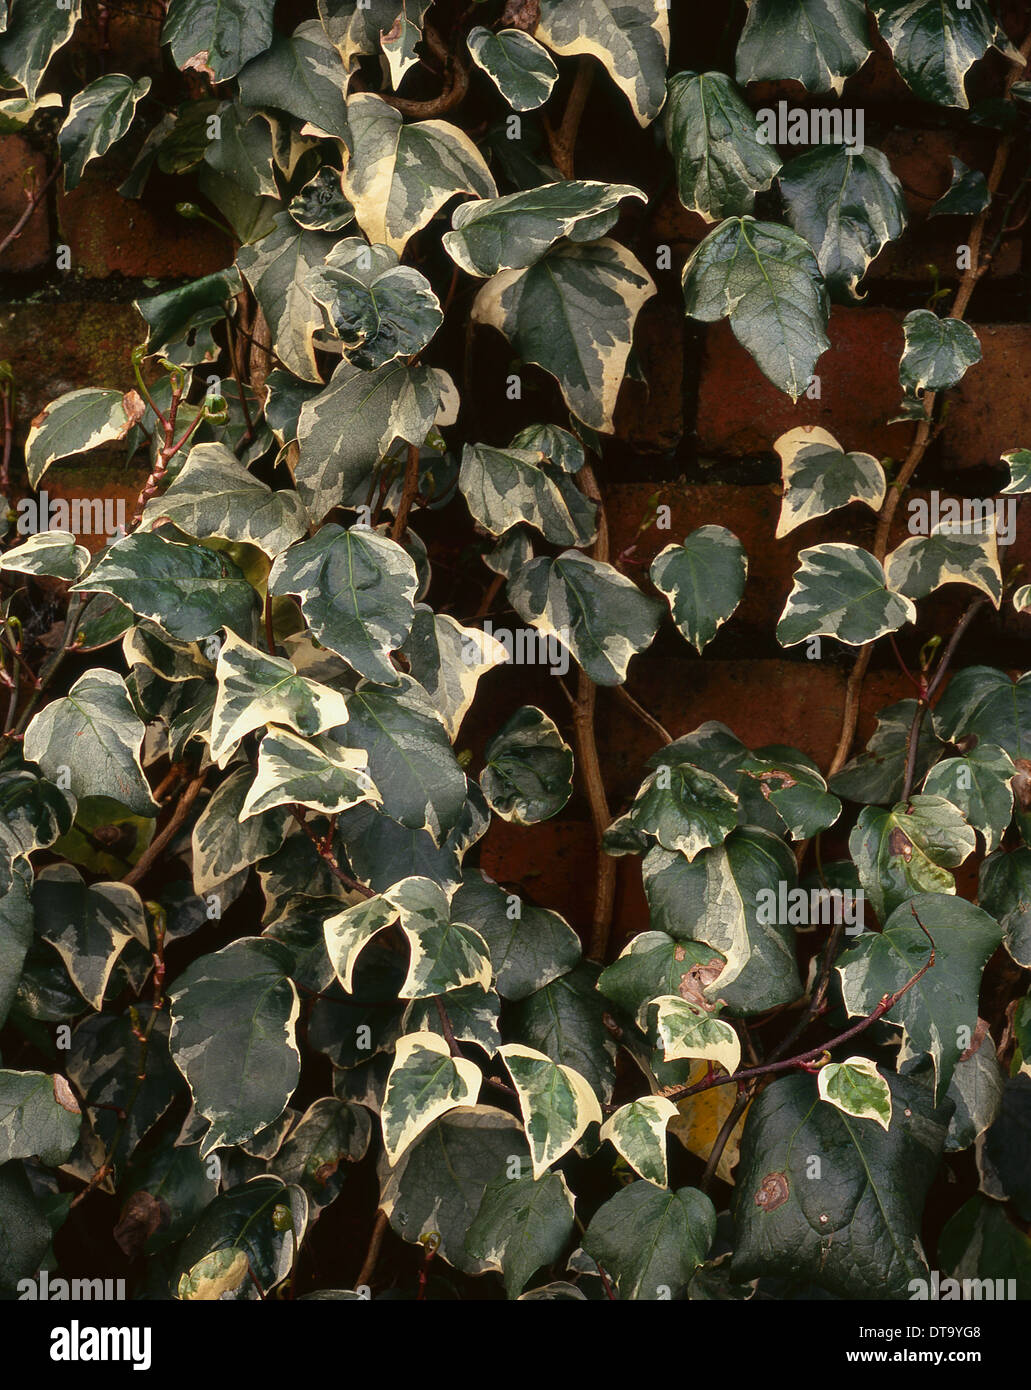 Hedera Canariensis var algeriensis Gloire de Marengo Ivy climbing on an old brick wall. Stock Photo